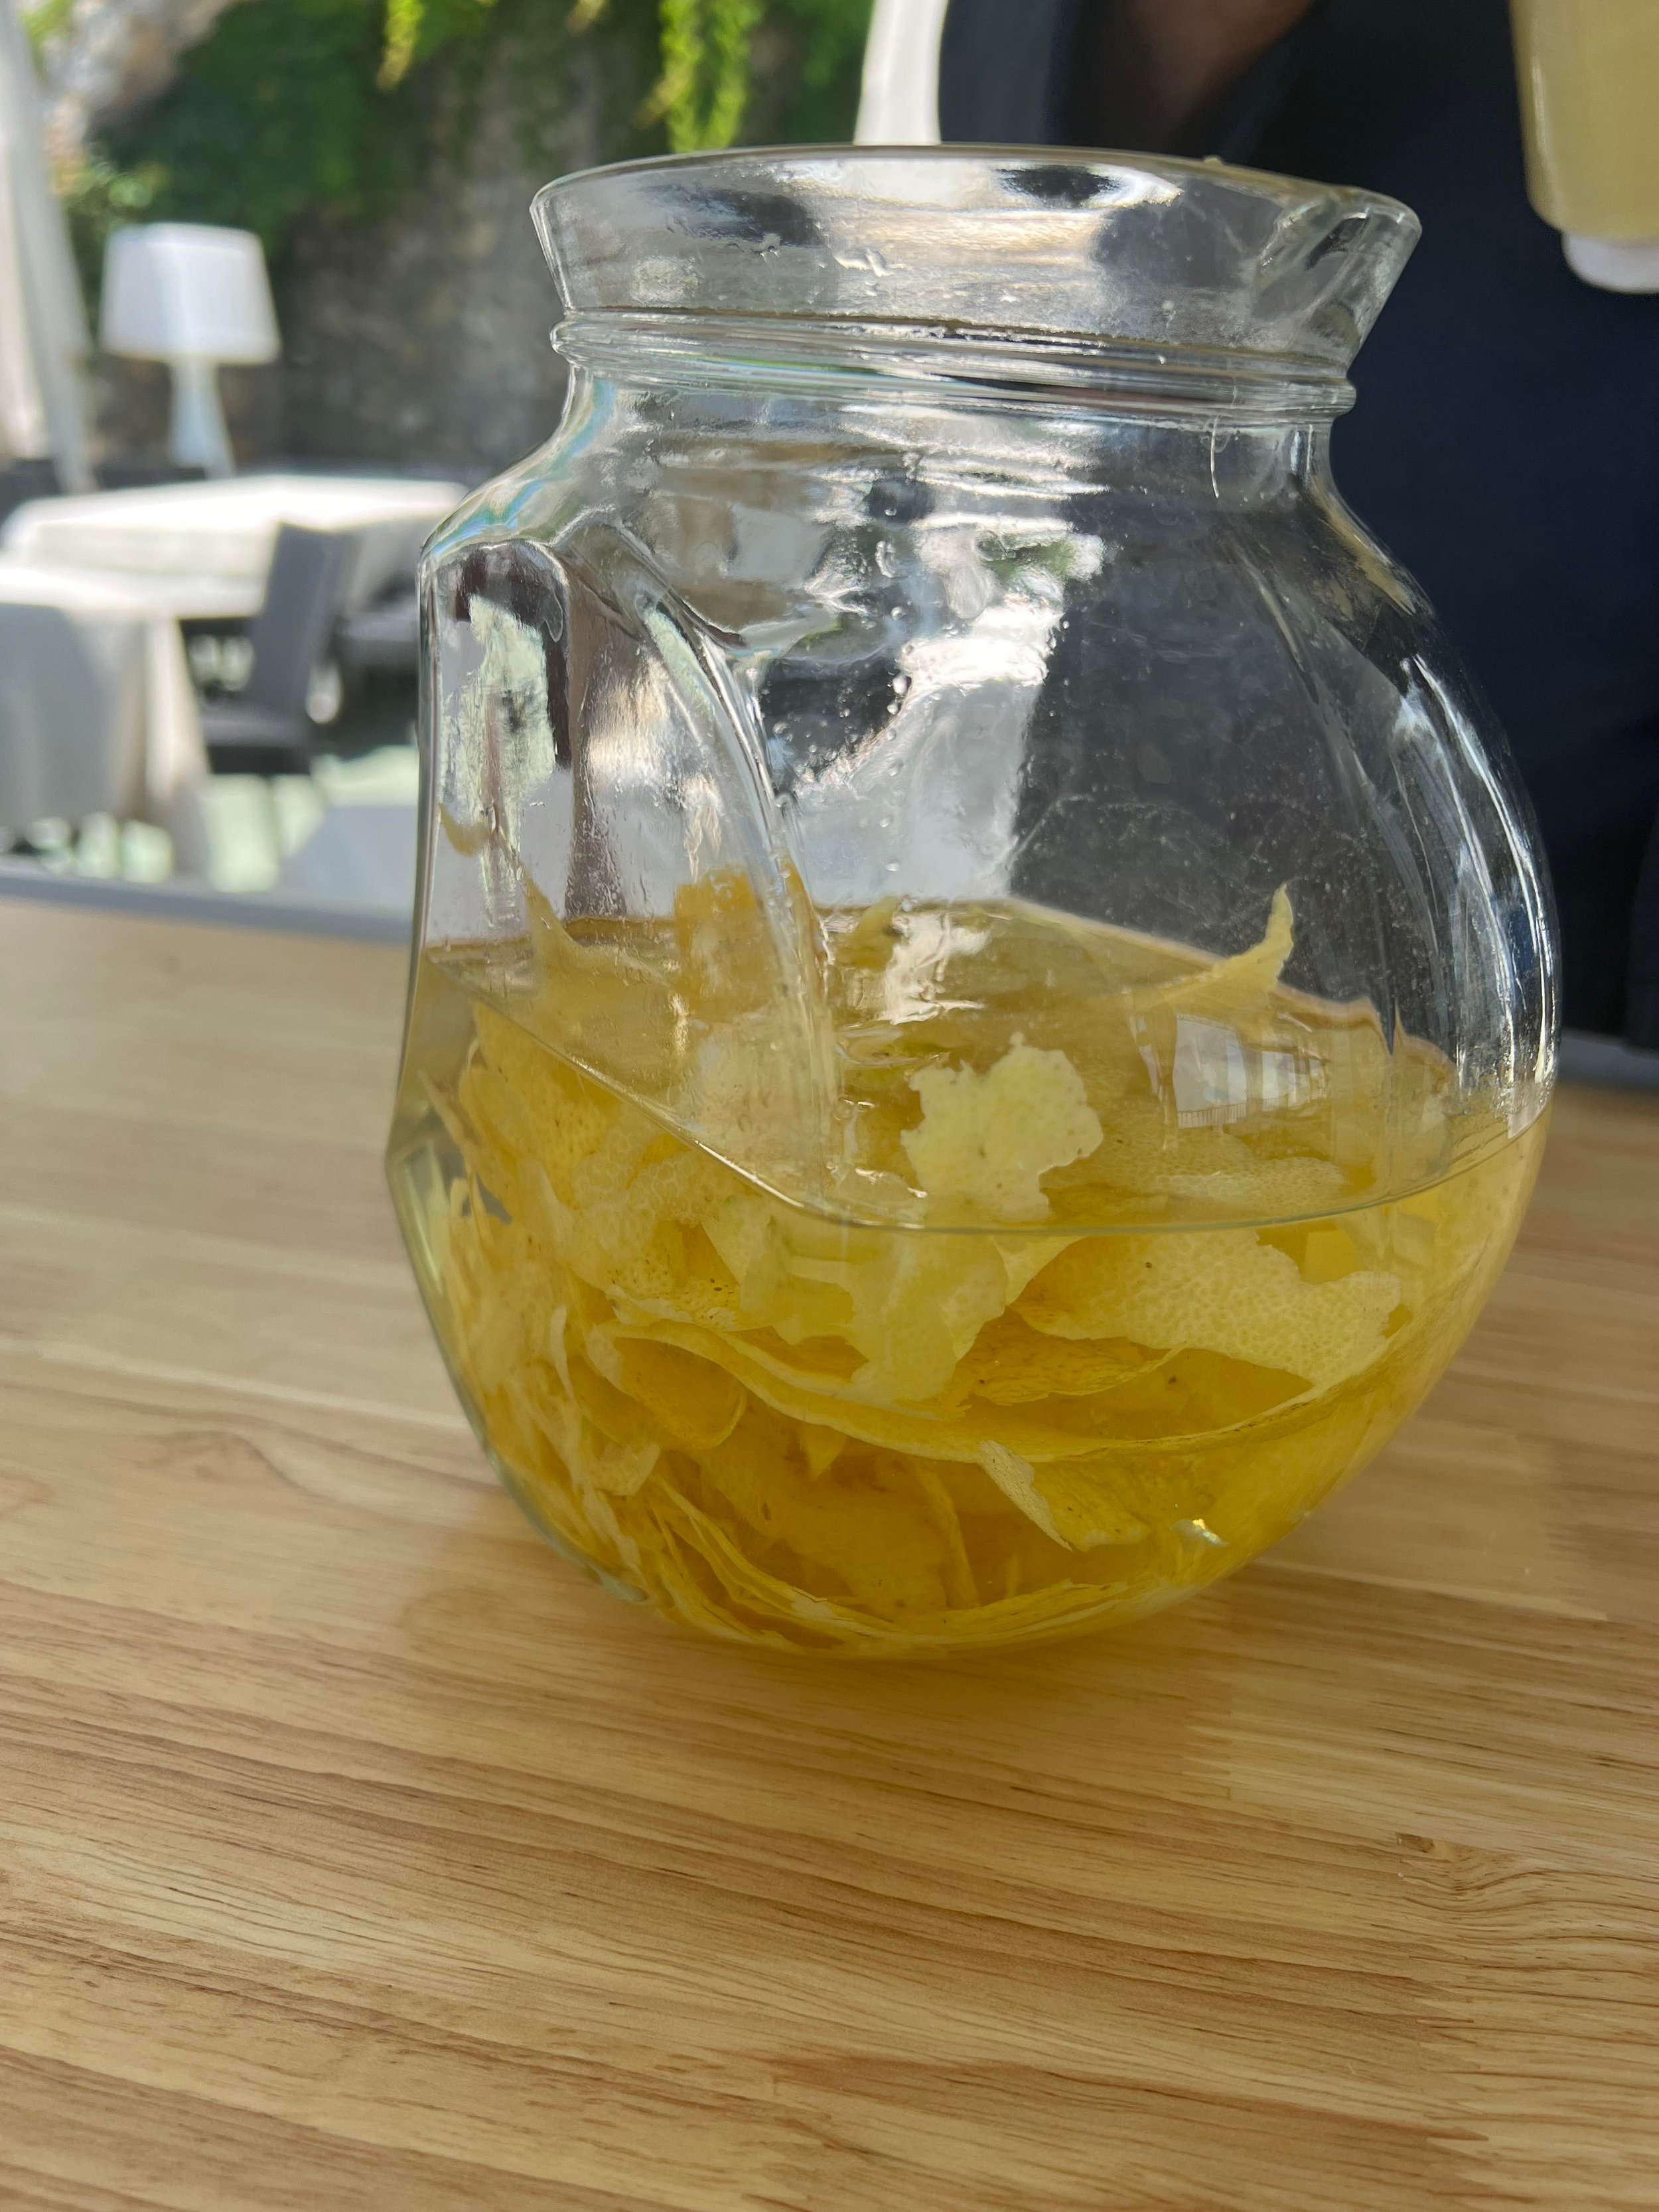 Combine the lemon peels and 1 litre of alcohol (Copy)